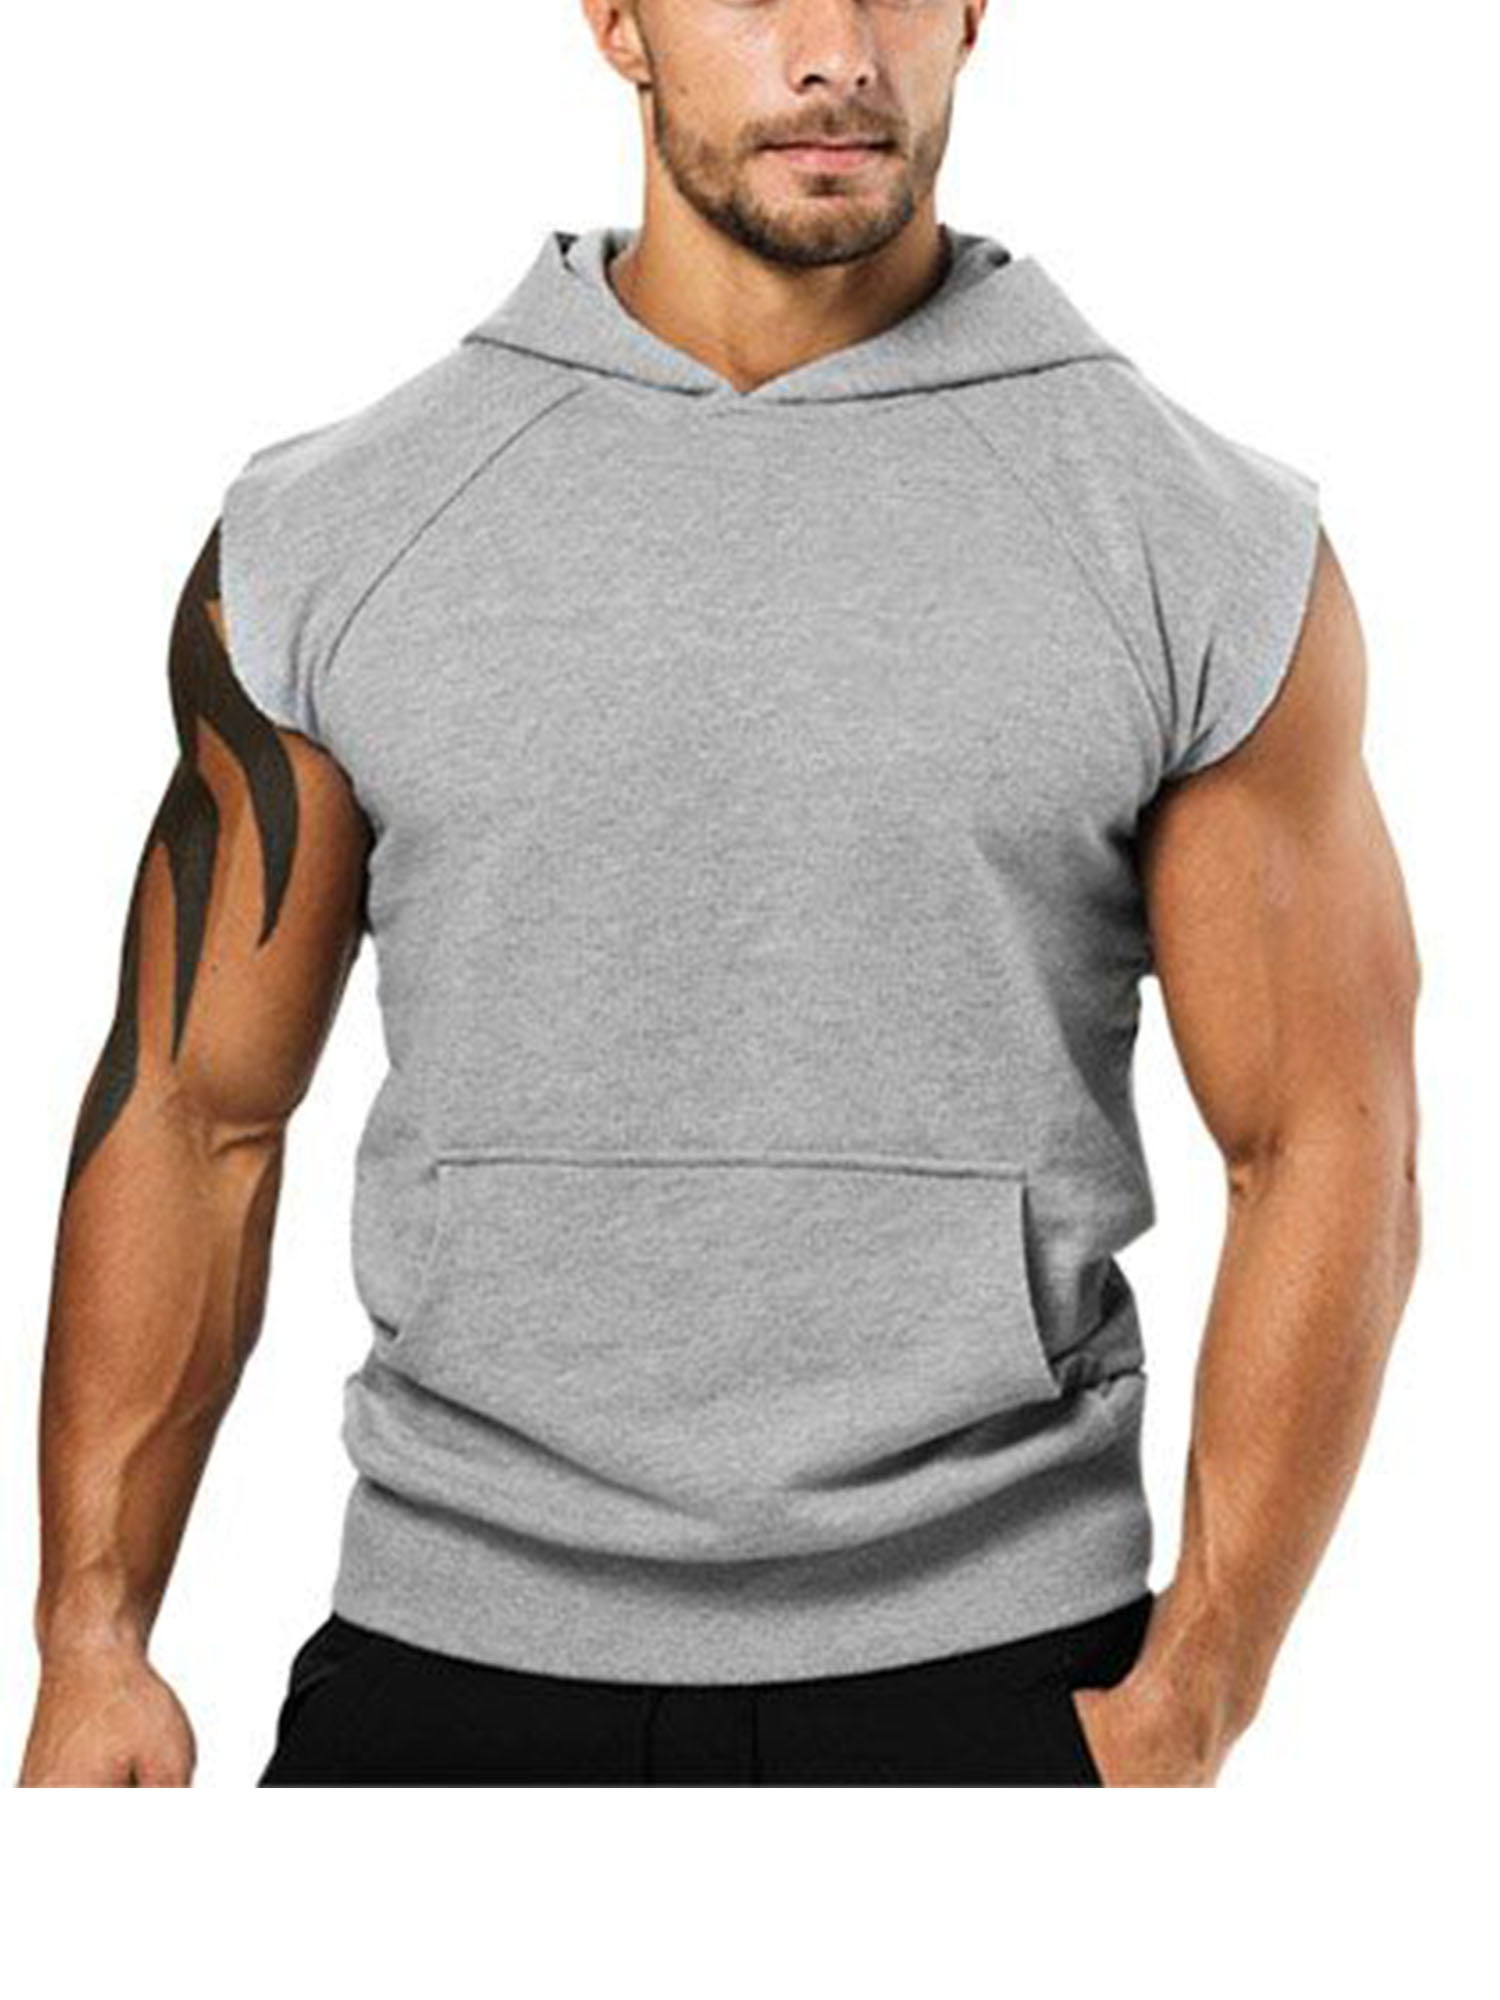 Fashion Slim Letter Printed Sleeveless T-Shirt Top Vest FarJing Mens Tank Top